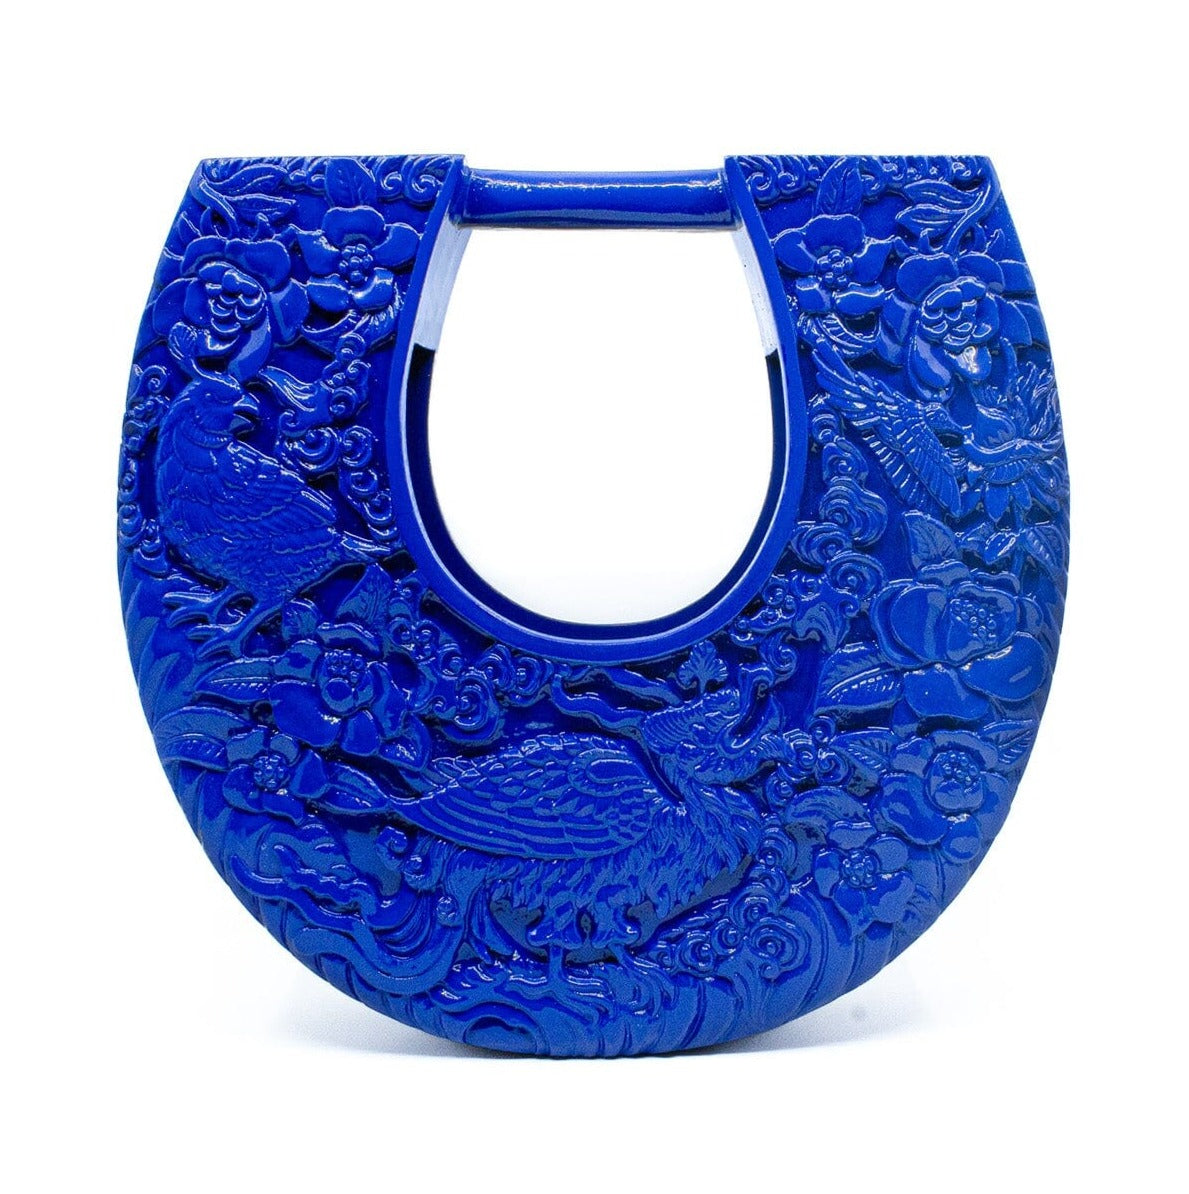 Simurgh's Kingdom Large Ushape Bag Open Top in Lacquered Royal Blue Bag Blumera 